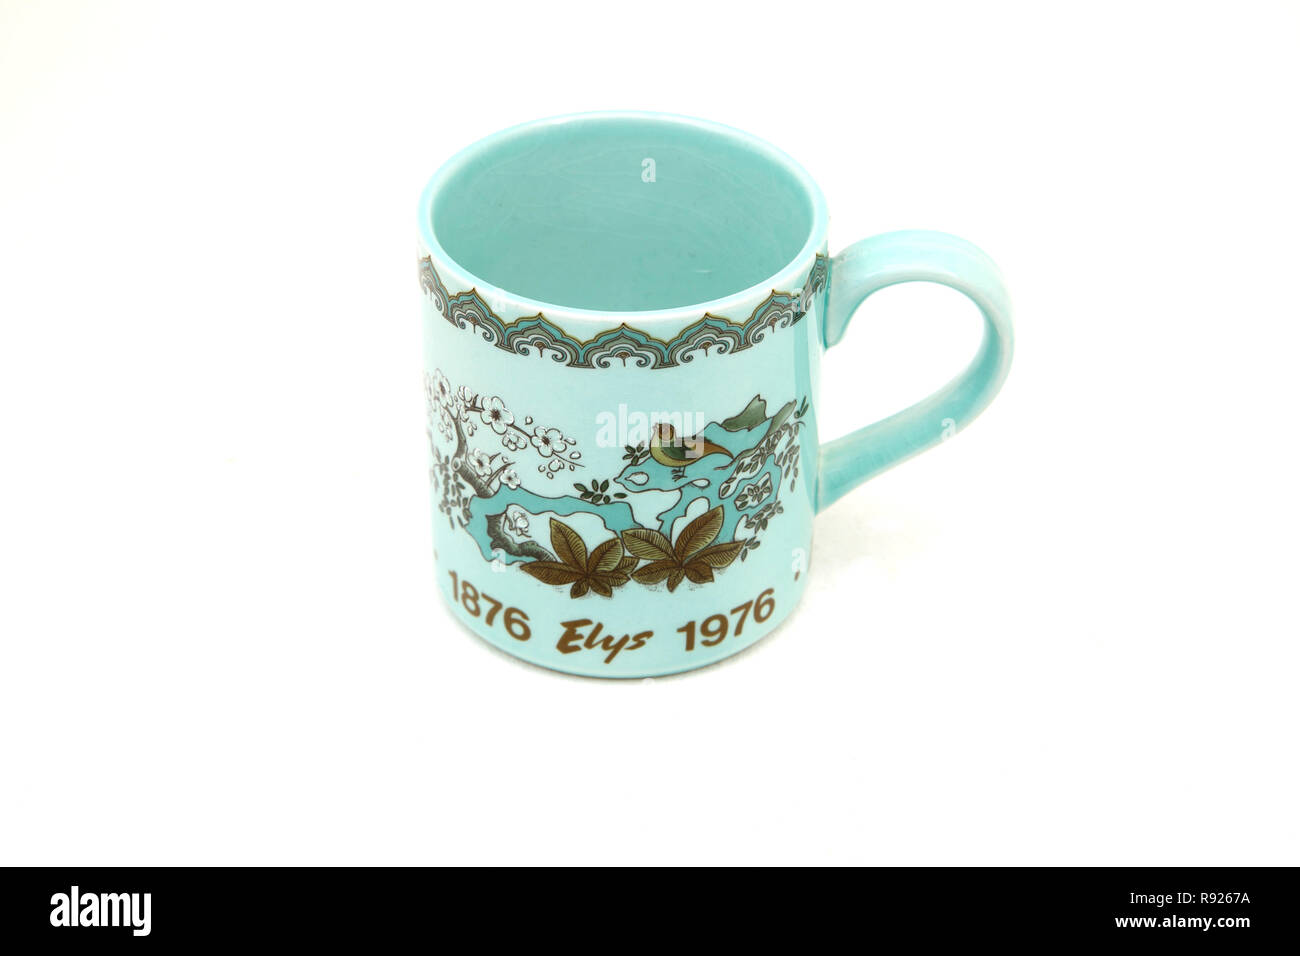 Vintage Ironstone Mug Commemorating the Centenary of Elys 1876 - 1976 Calyx Ware Adams Chusan Stock Photo